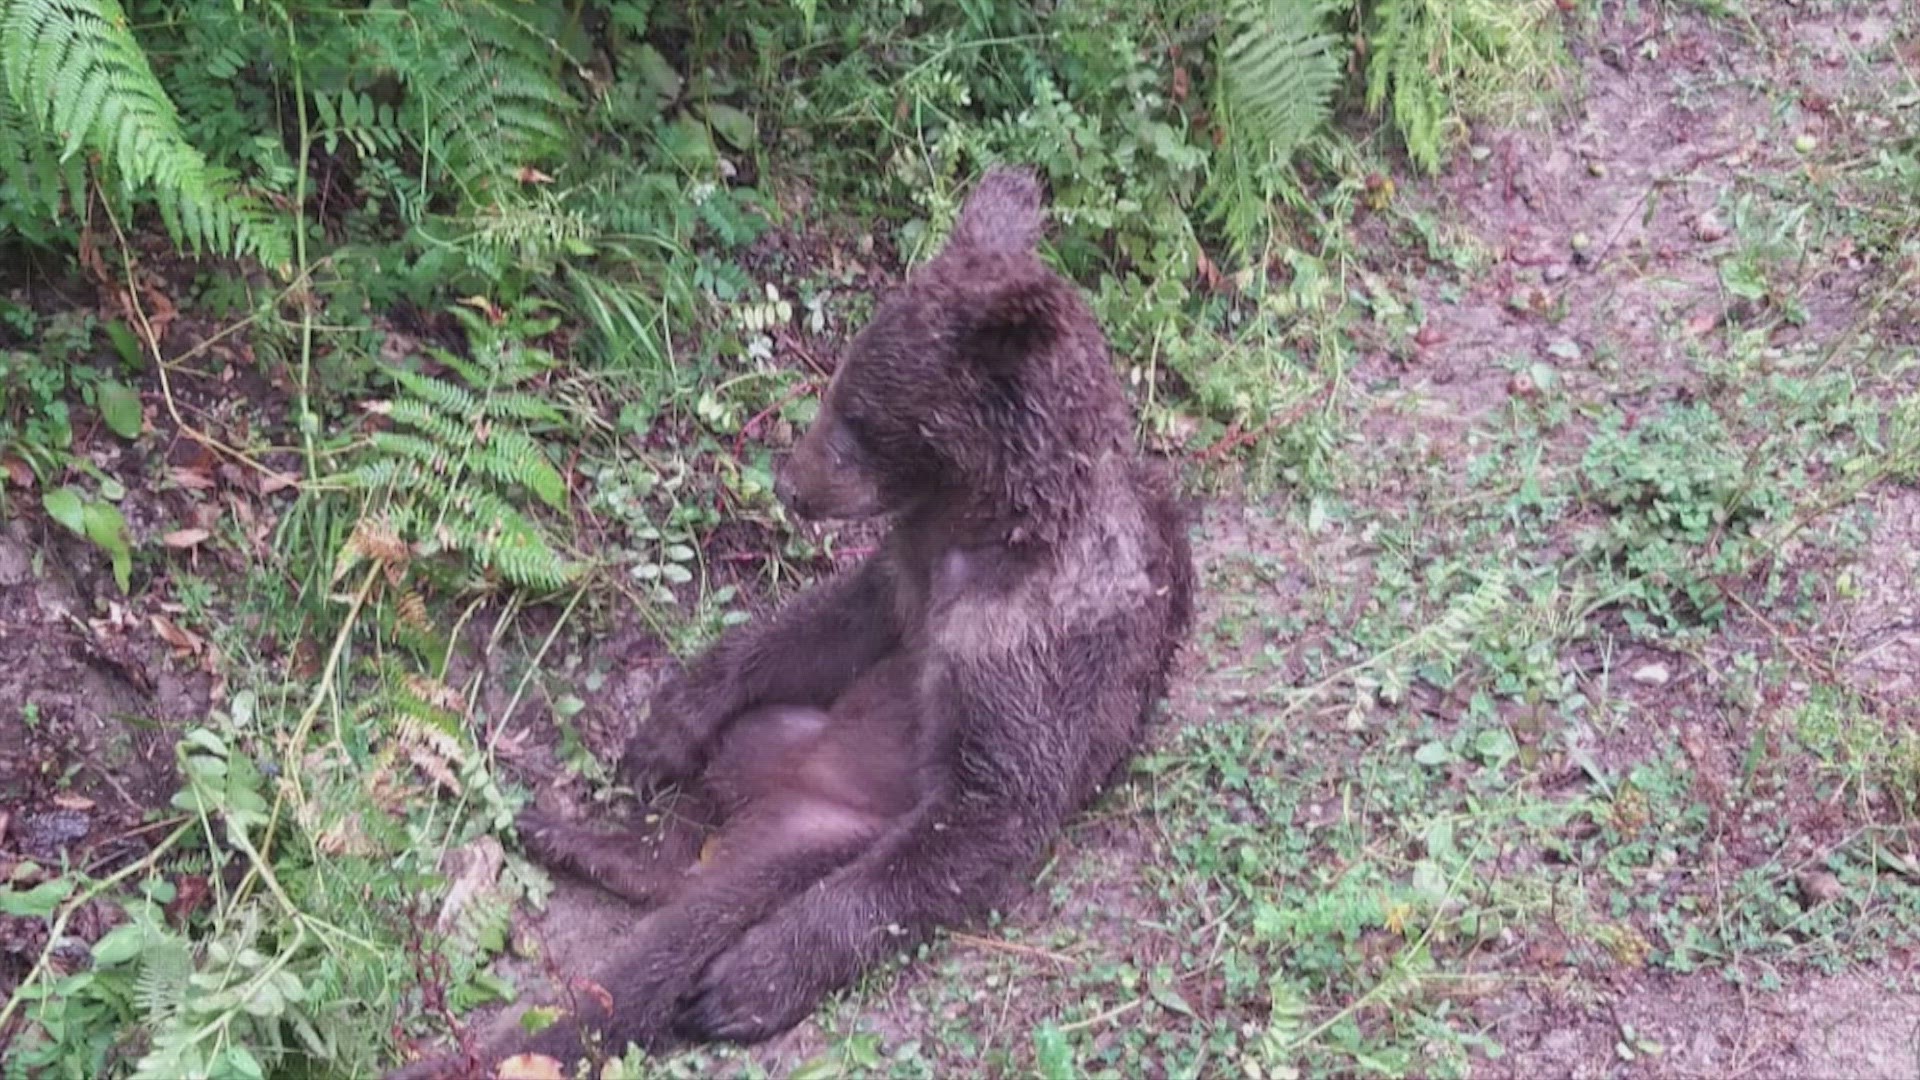 This bear got into the wrong honey! Buzz60's Keri Lumm reports.